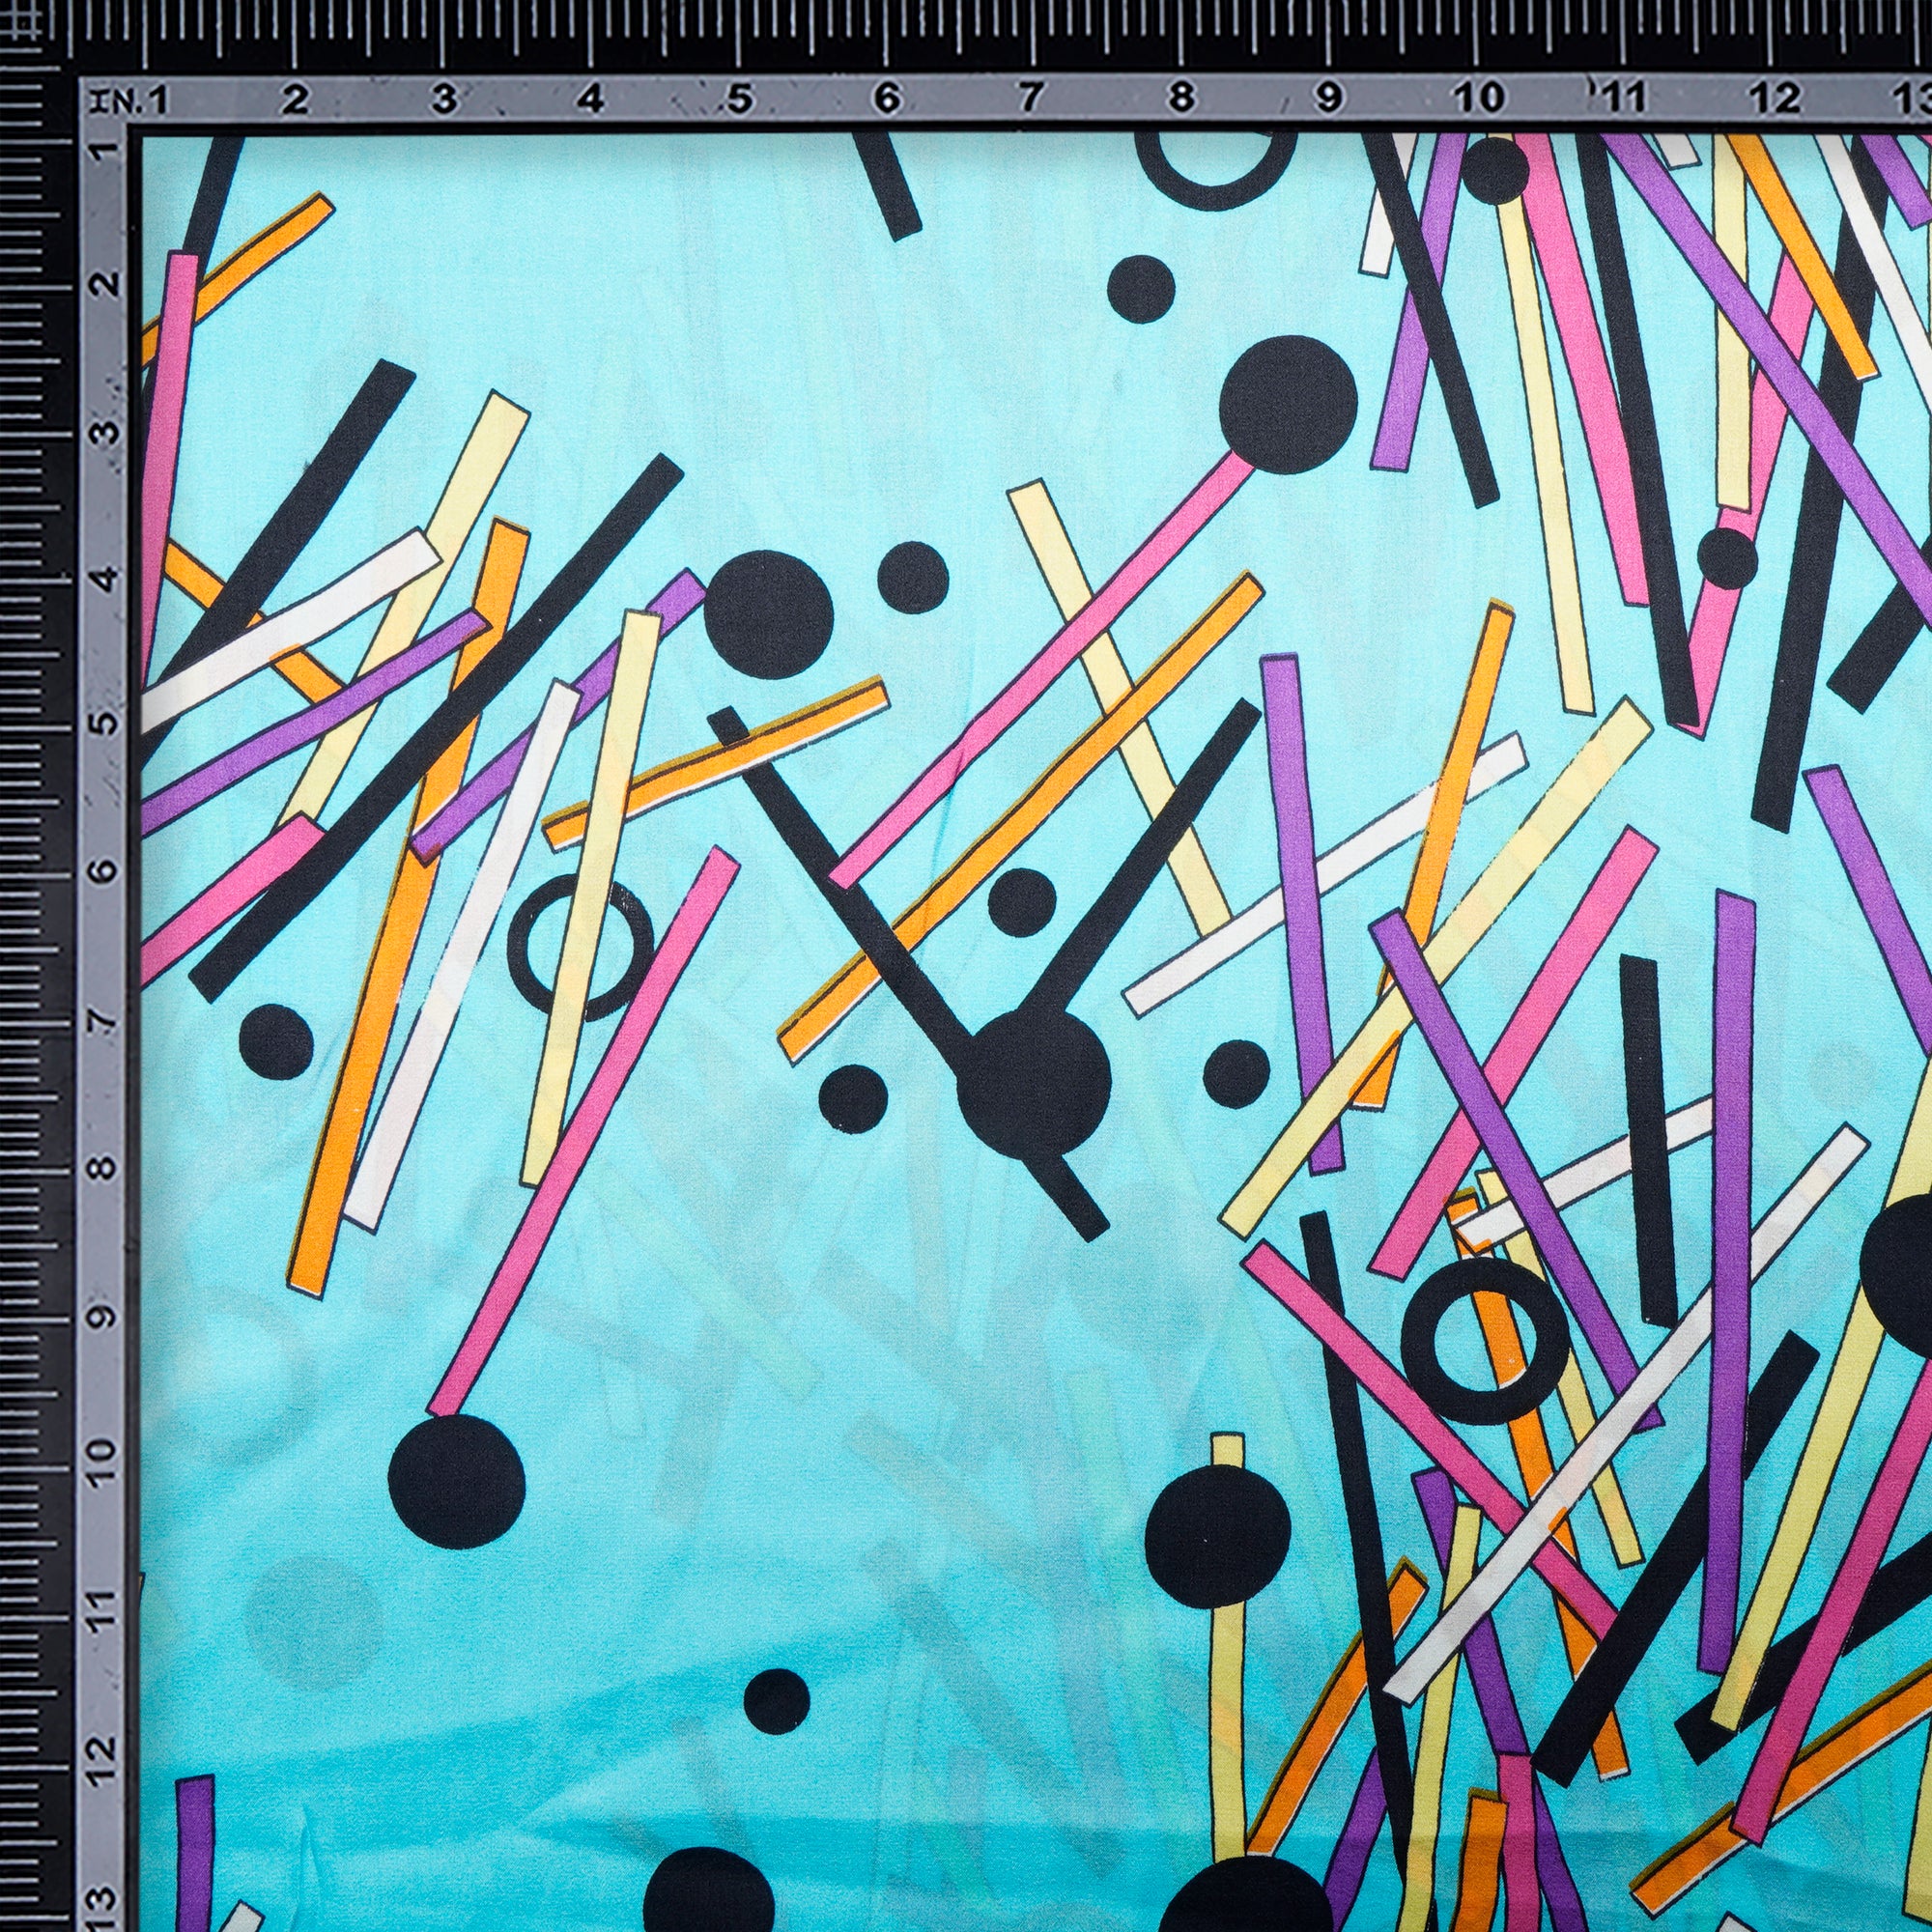 Ice Blue Geometric Pattern Digital Print Imported Silk Satin Fabric (44" Width)